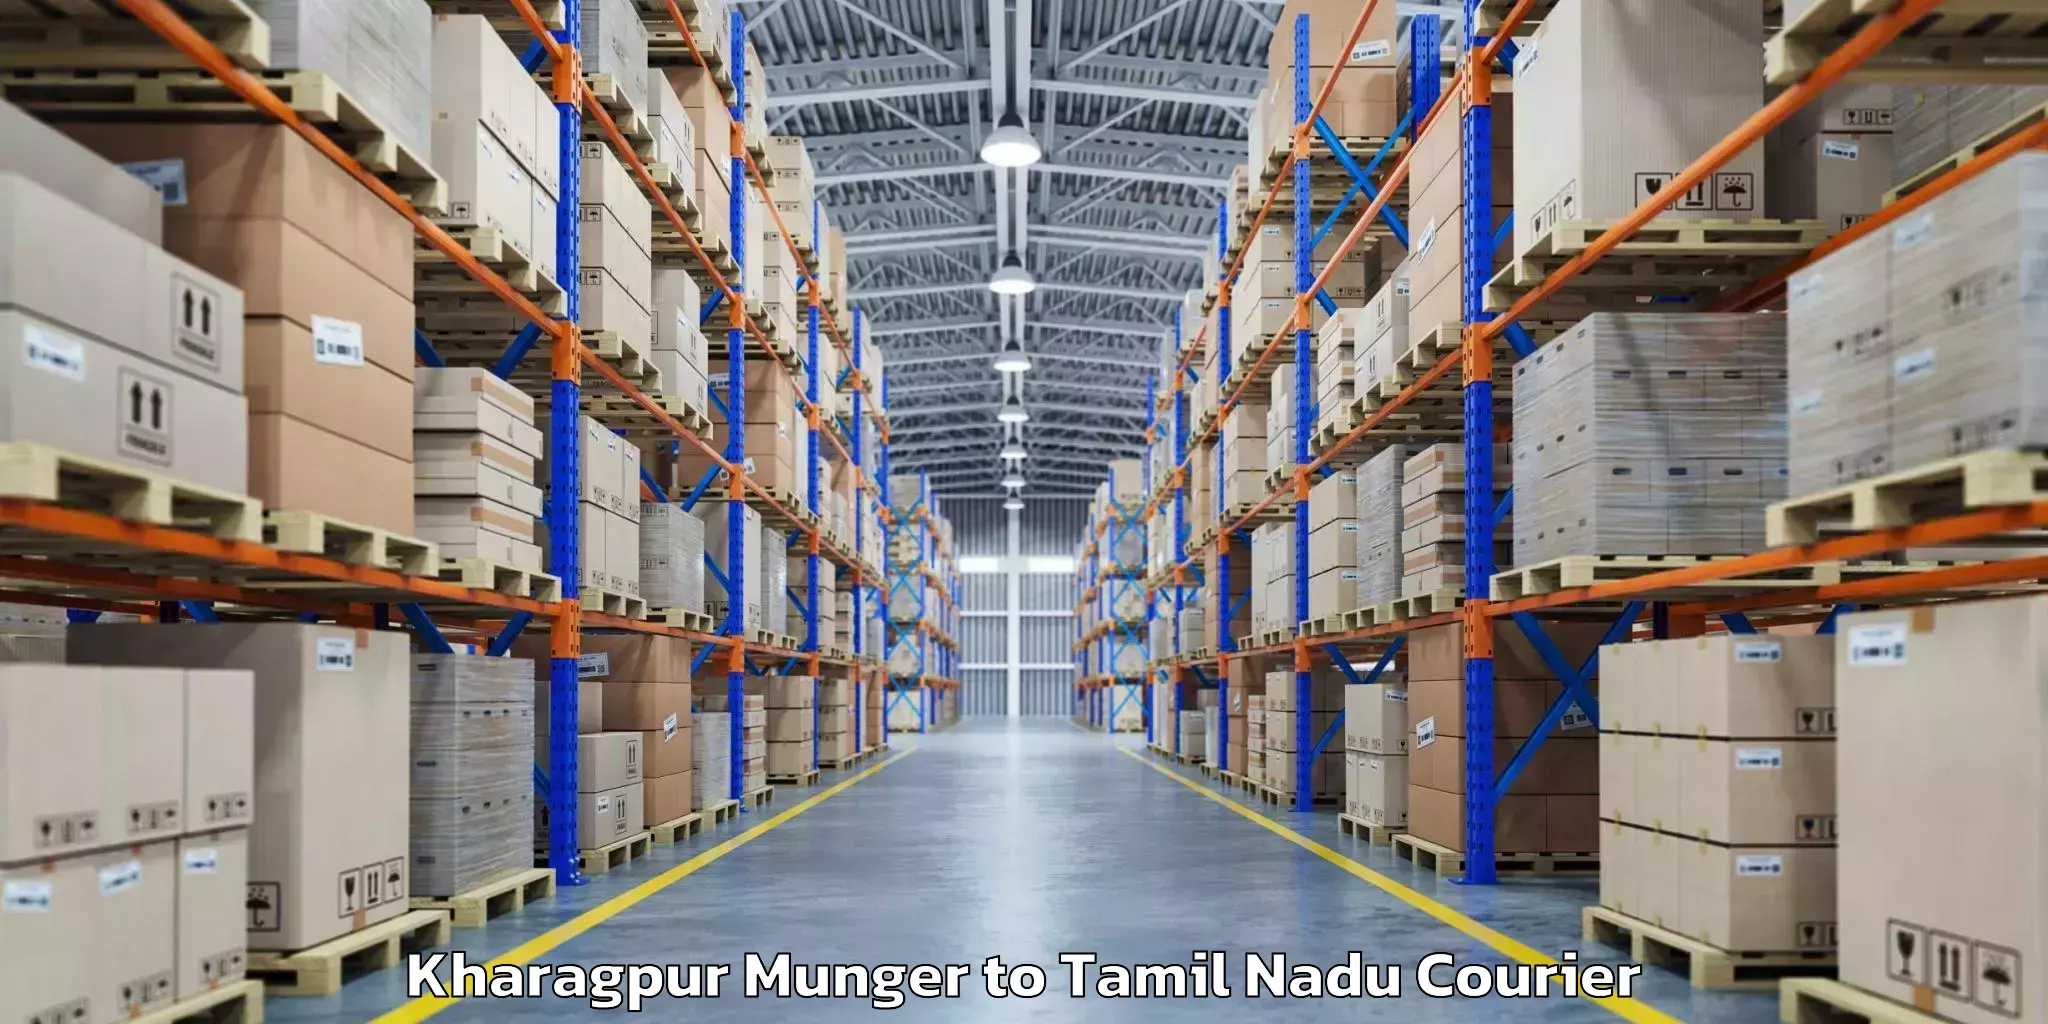 Luggage shipment specialists Kharagpur Munger to Tamil Nadu